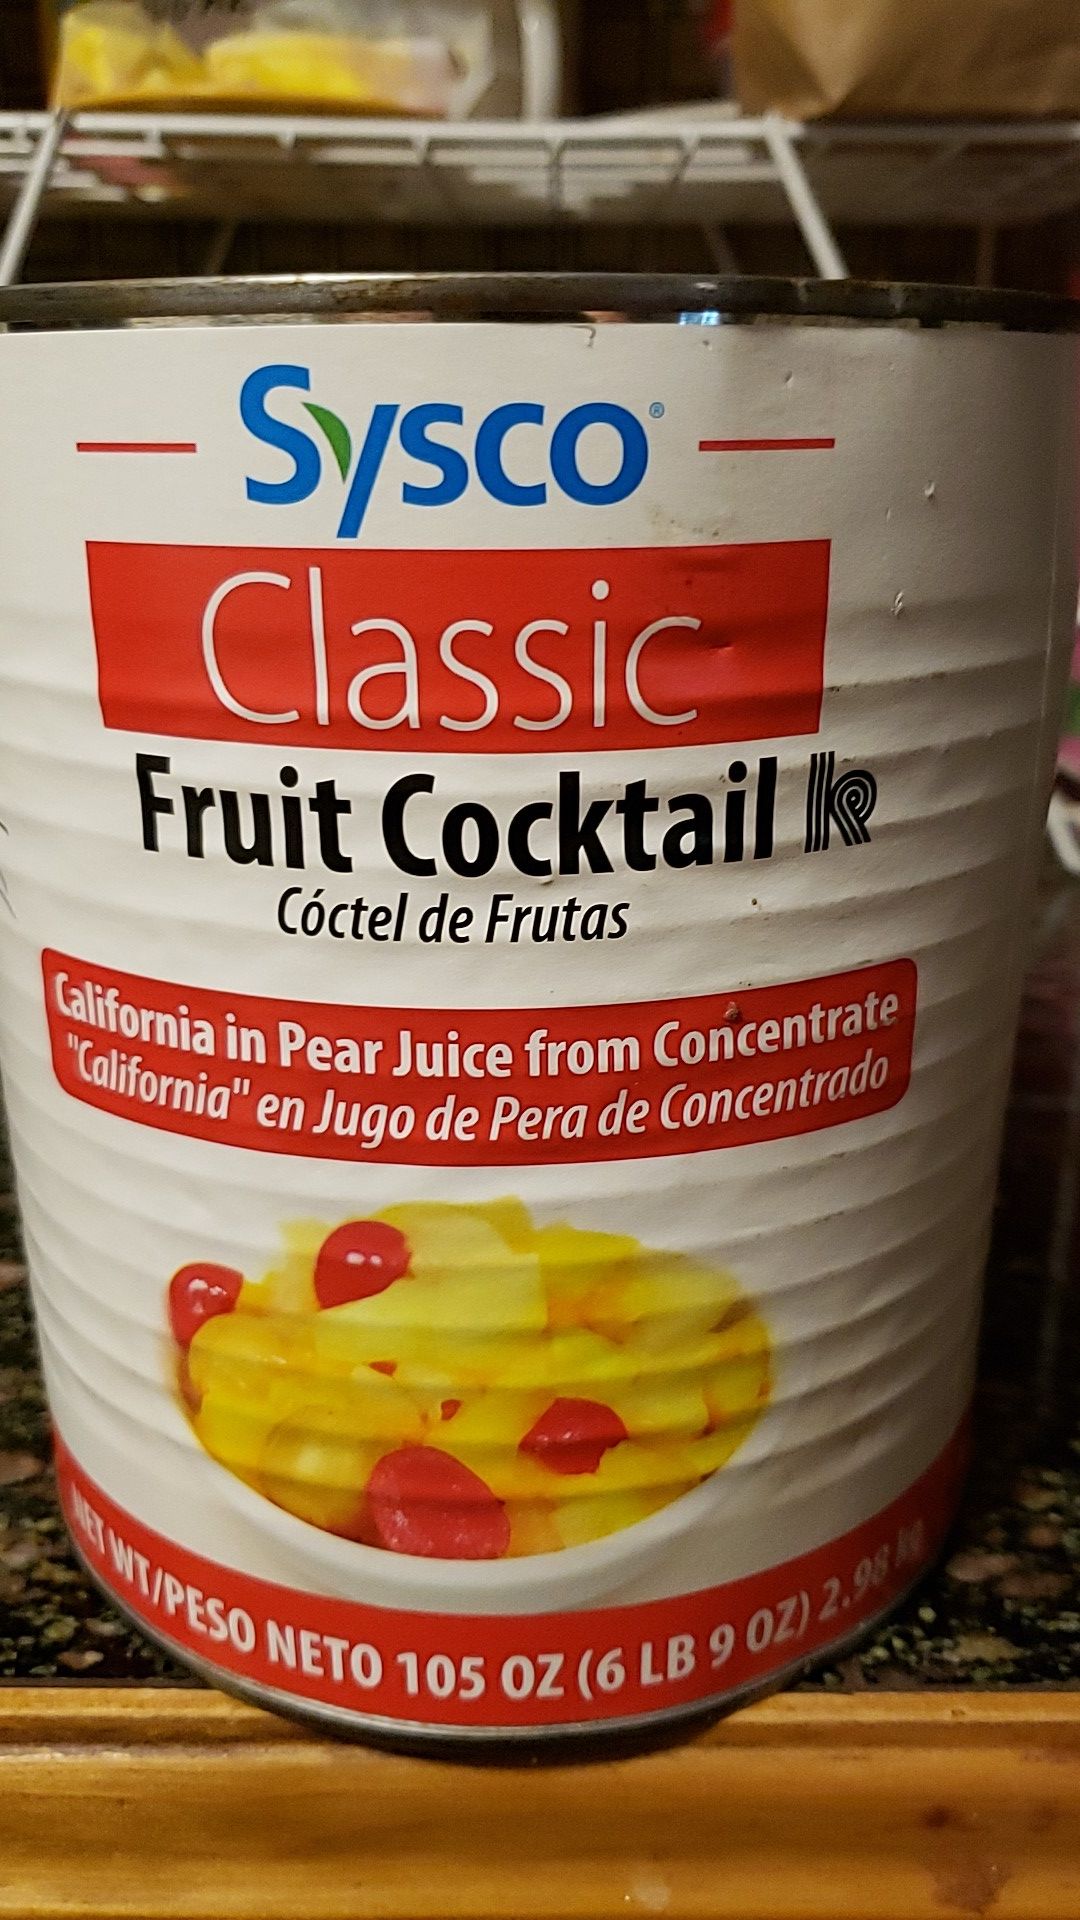 Free fruit cocktail.....PENDING